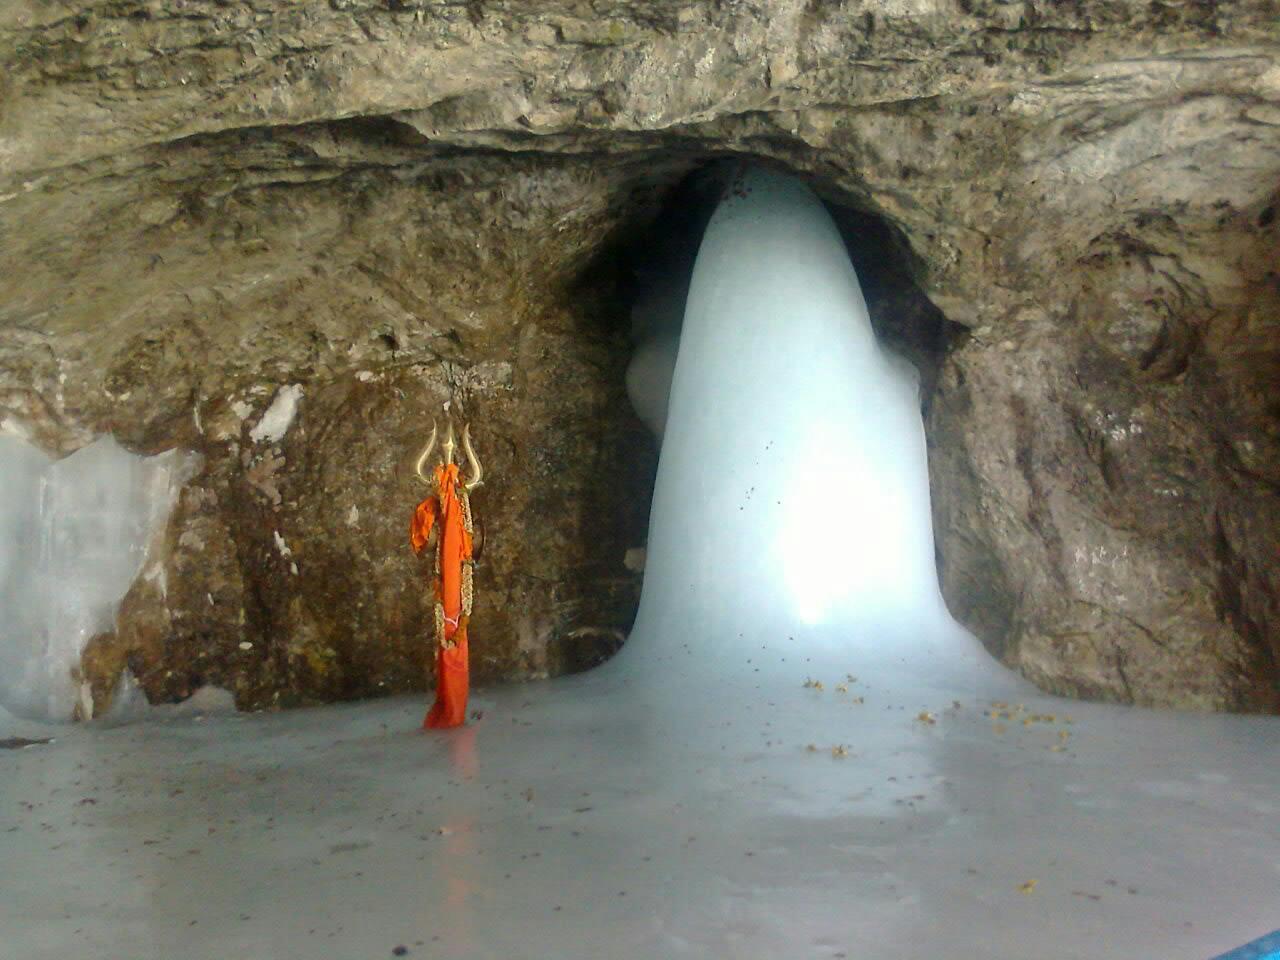 Amarnath Lord Shiva Lingam Kailash tantra press tantraesdevocion inciensoshop blog de tantra Shivaismo de cachemira advaita Vedanta y espiritualidad hindu